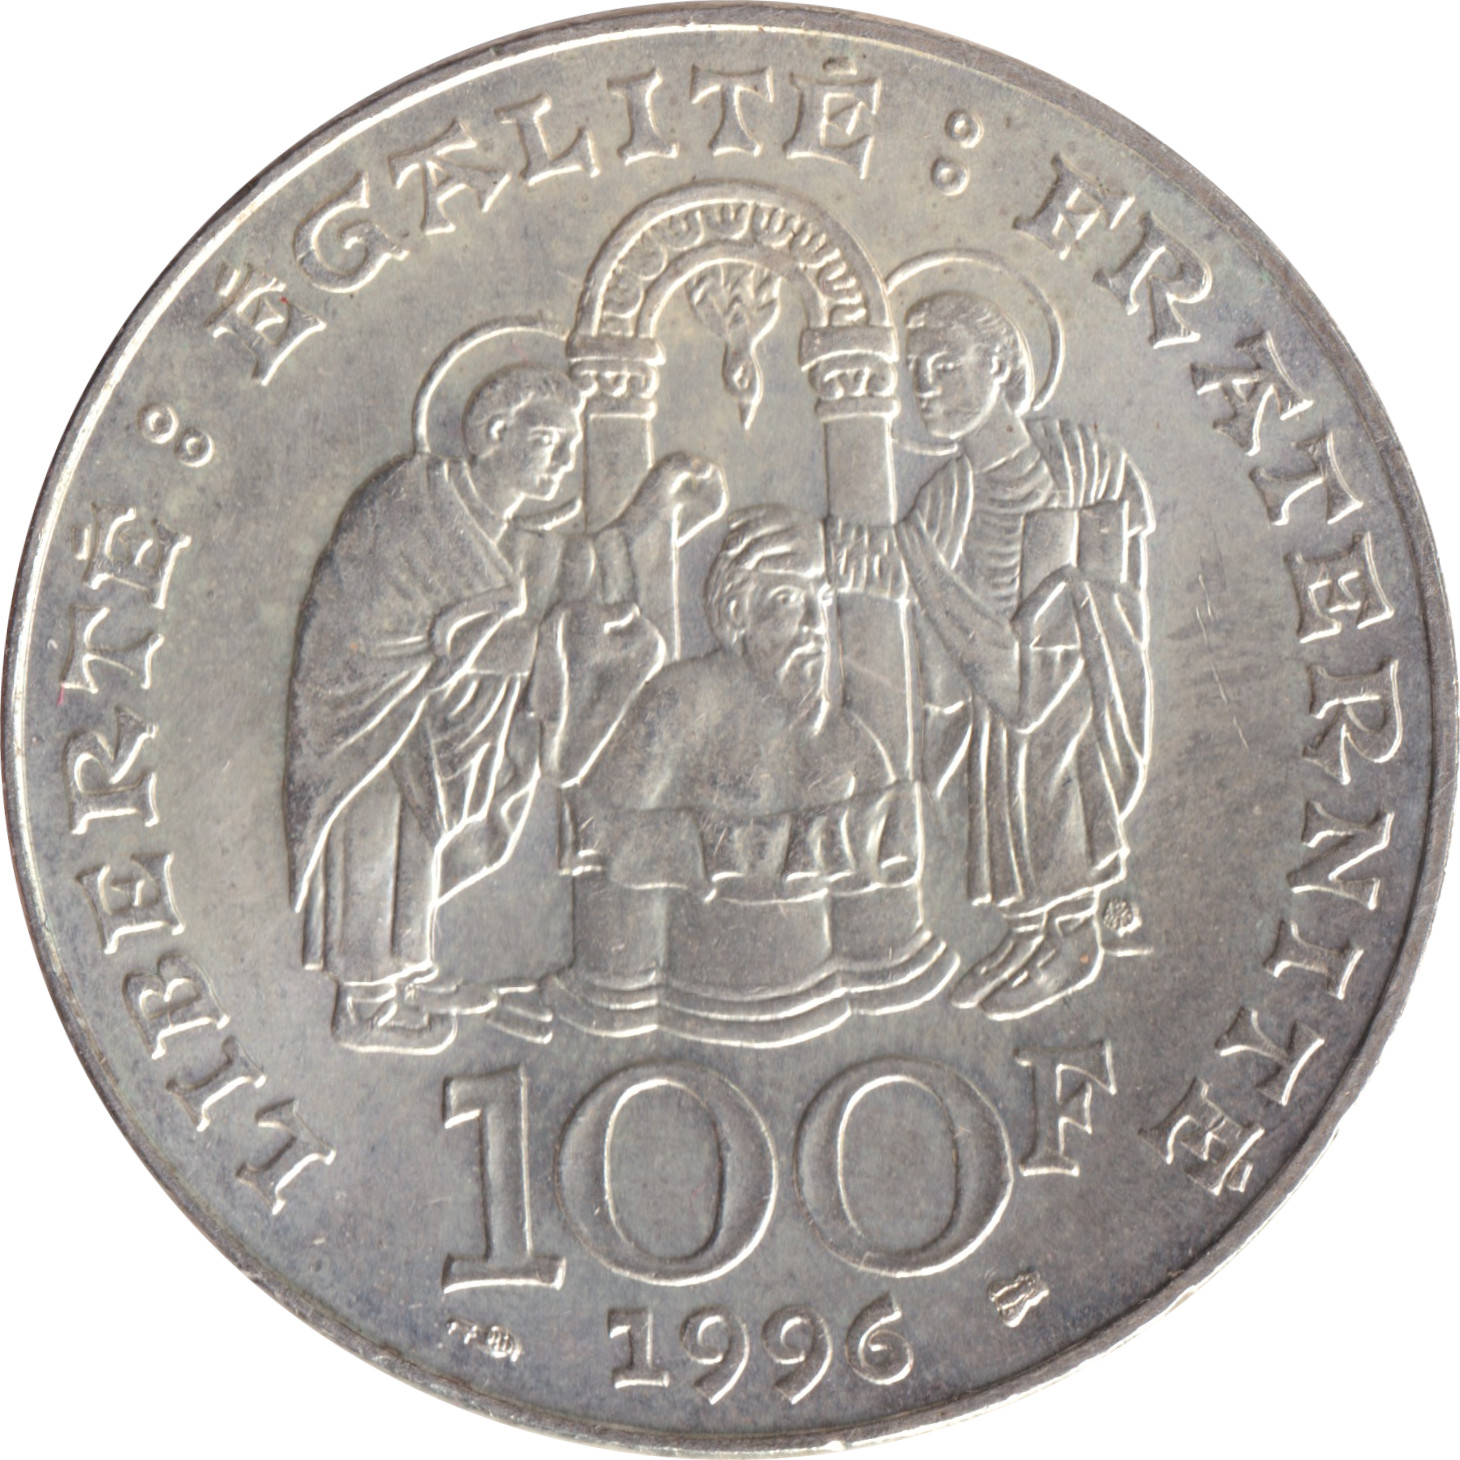 100 francs - Clovis